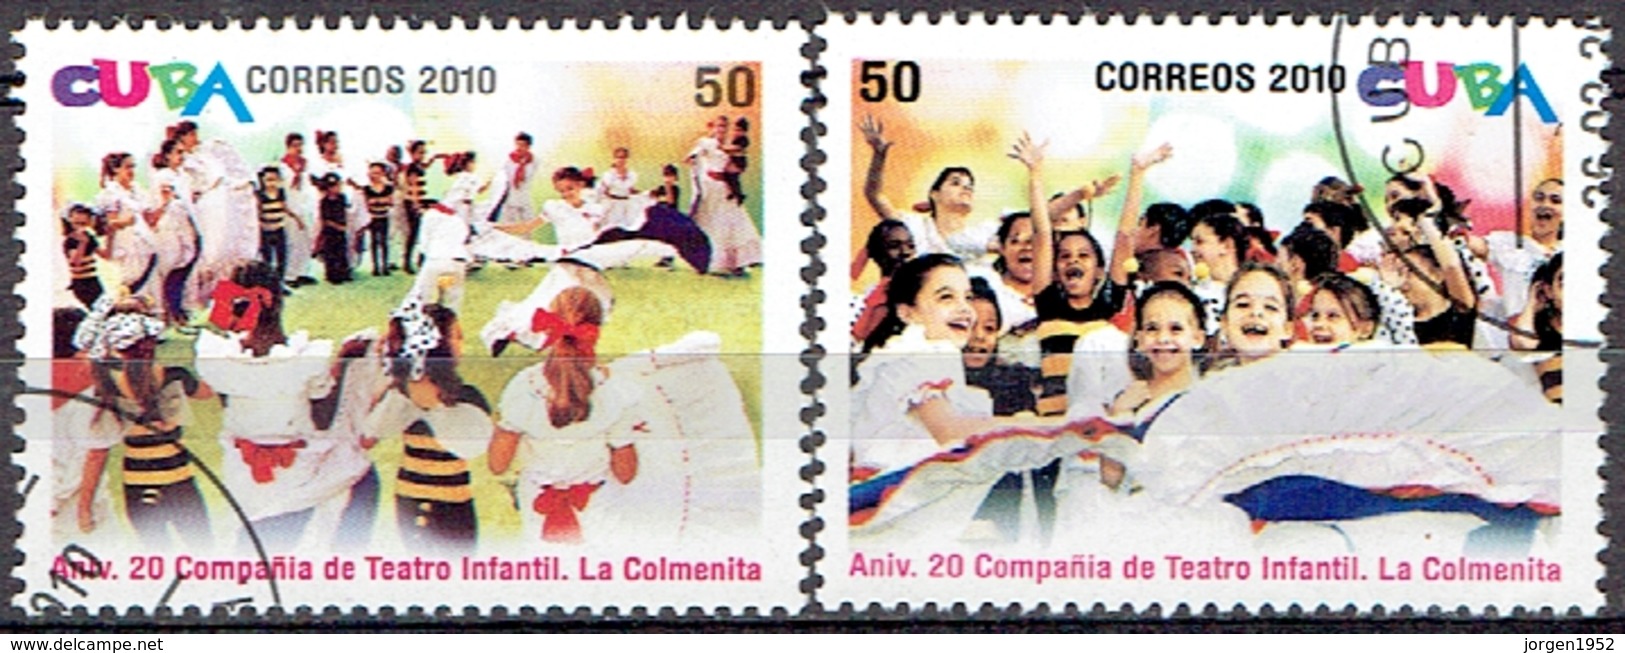 CUBA # FROM 2010 STAMPWORLD 5368-69 - Gebruikt